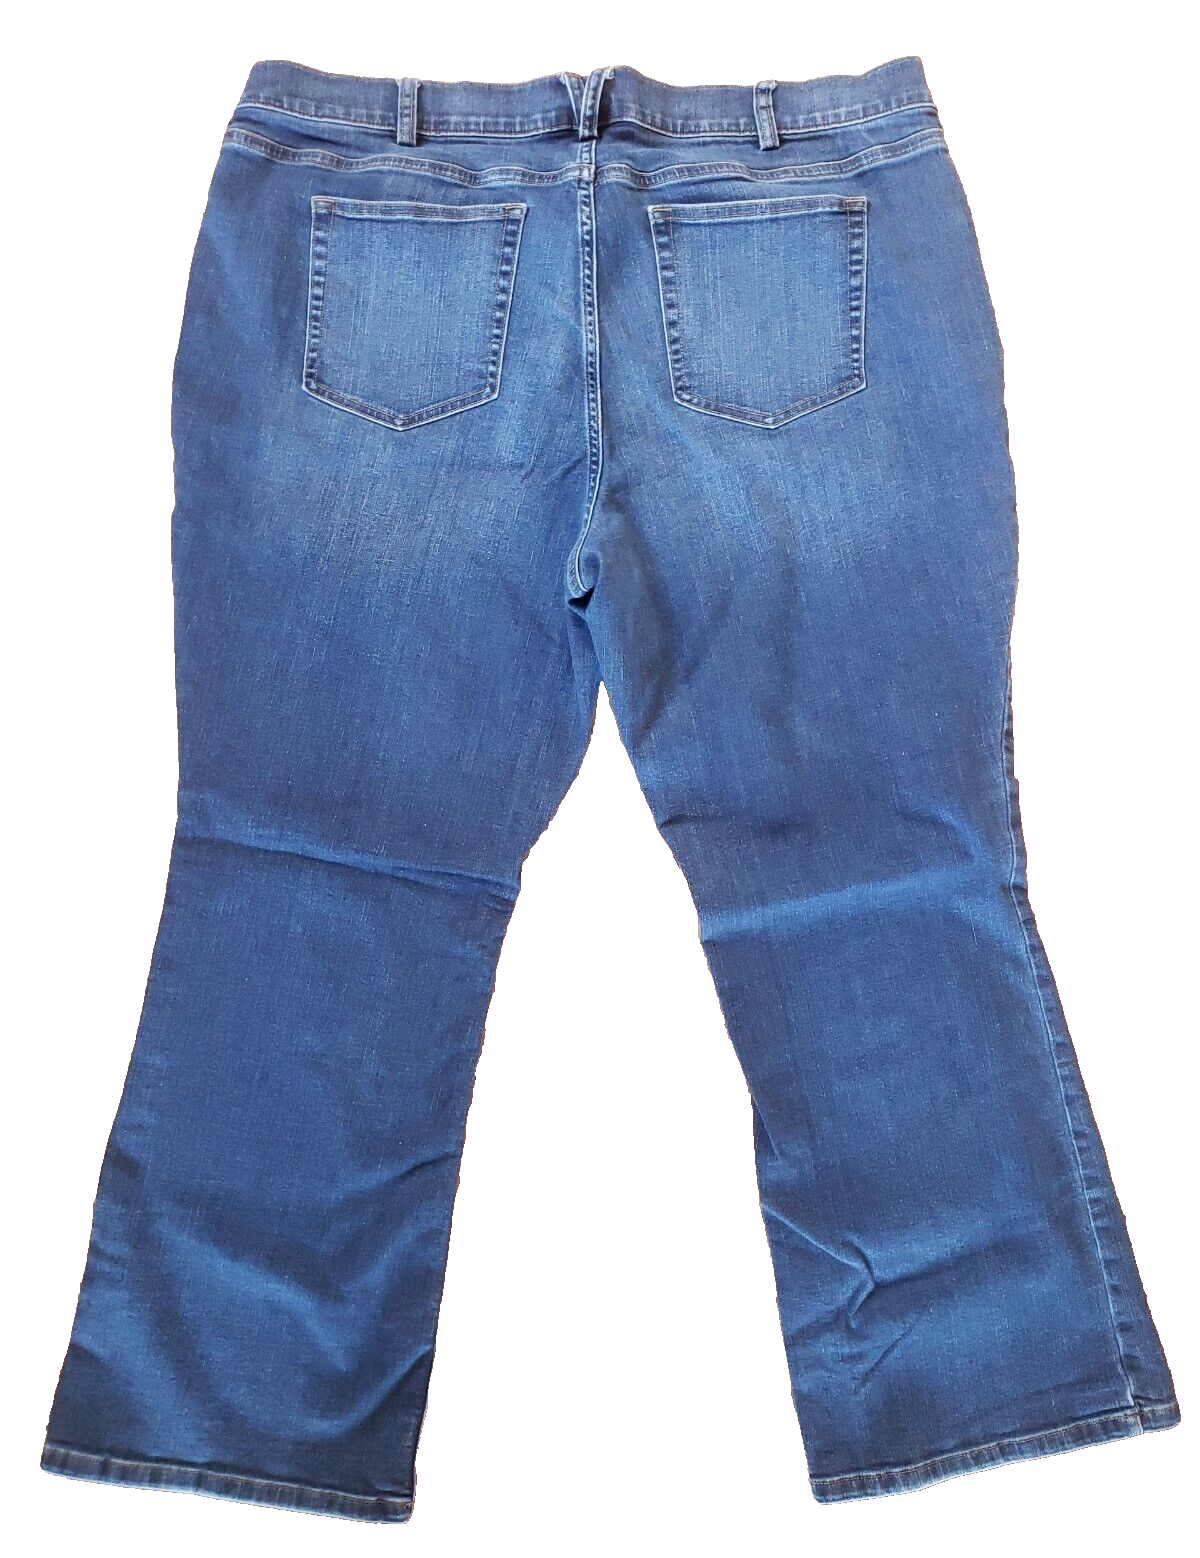 Primary image for Duluth Trading Bootcut Jeans Womens Plus Sz 20W x29 Medium Blue Daily Denim Flex